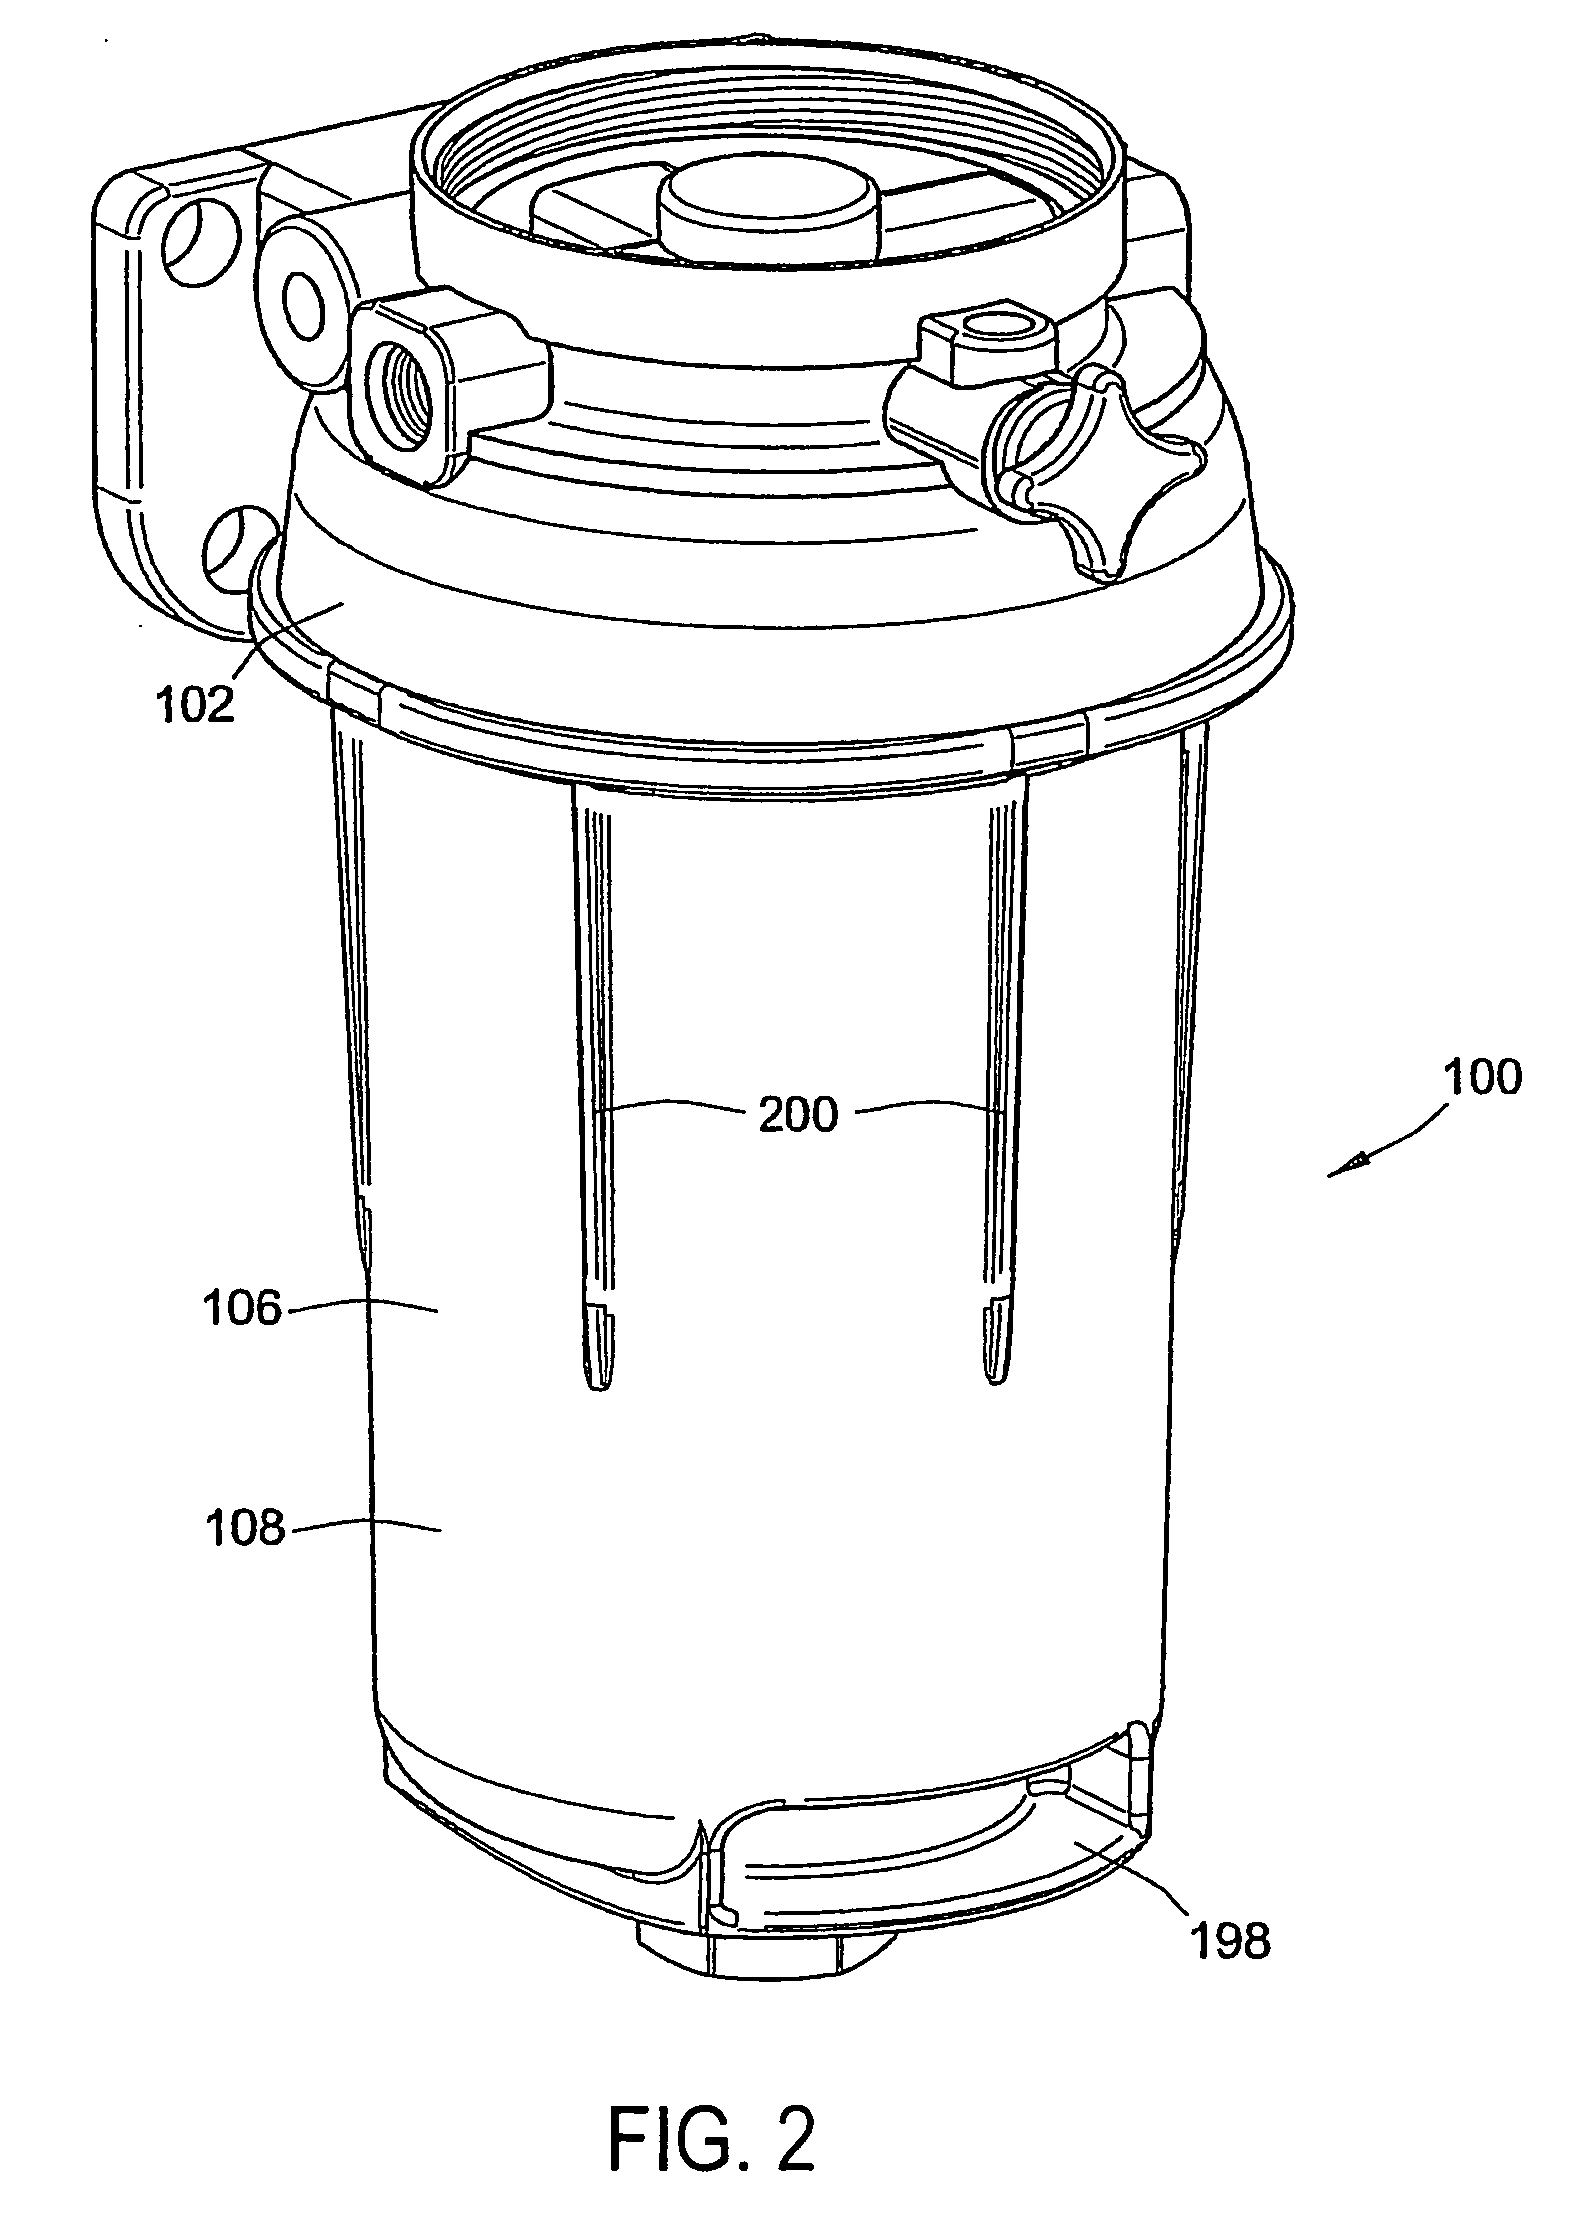 Filter apparatus